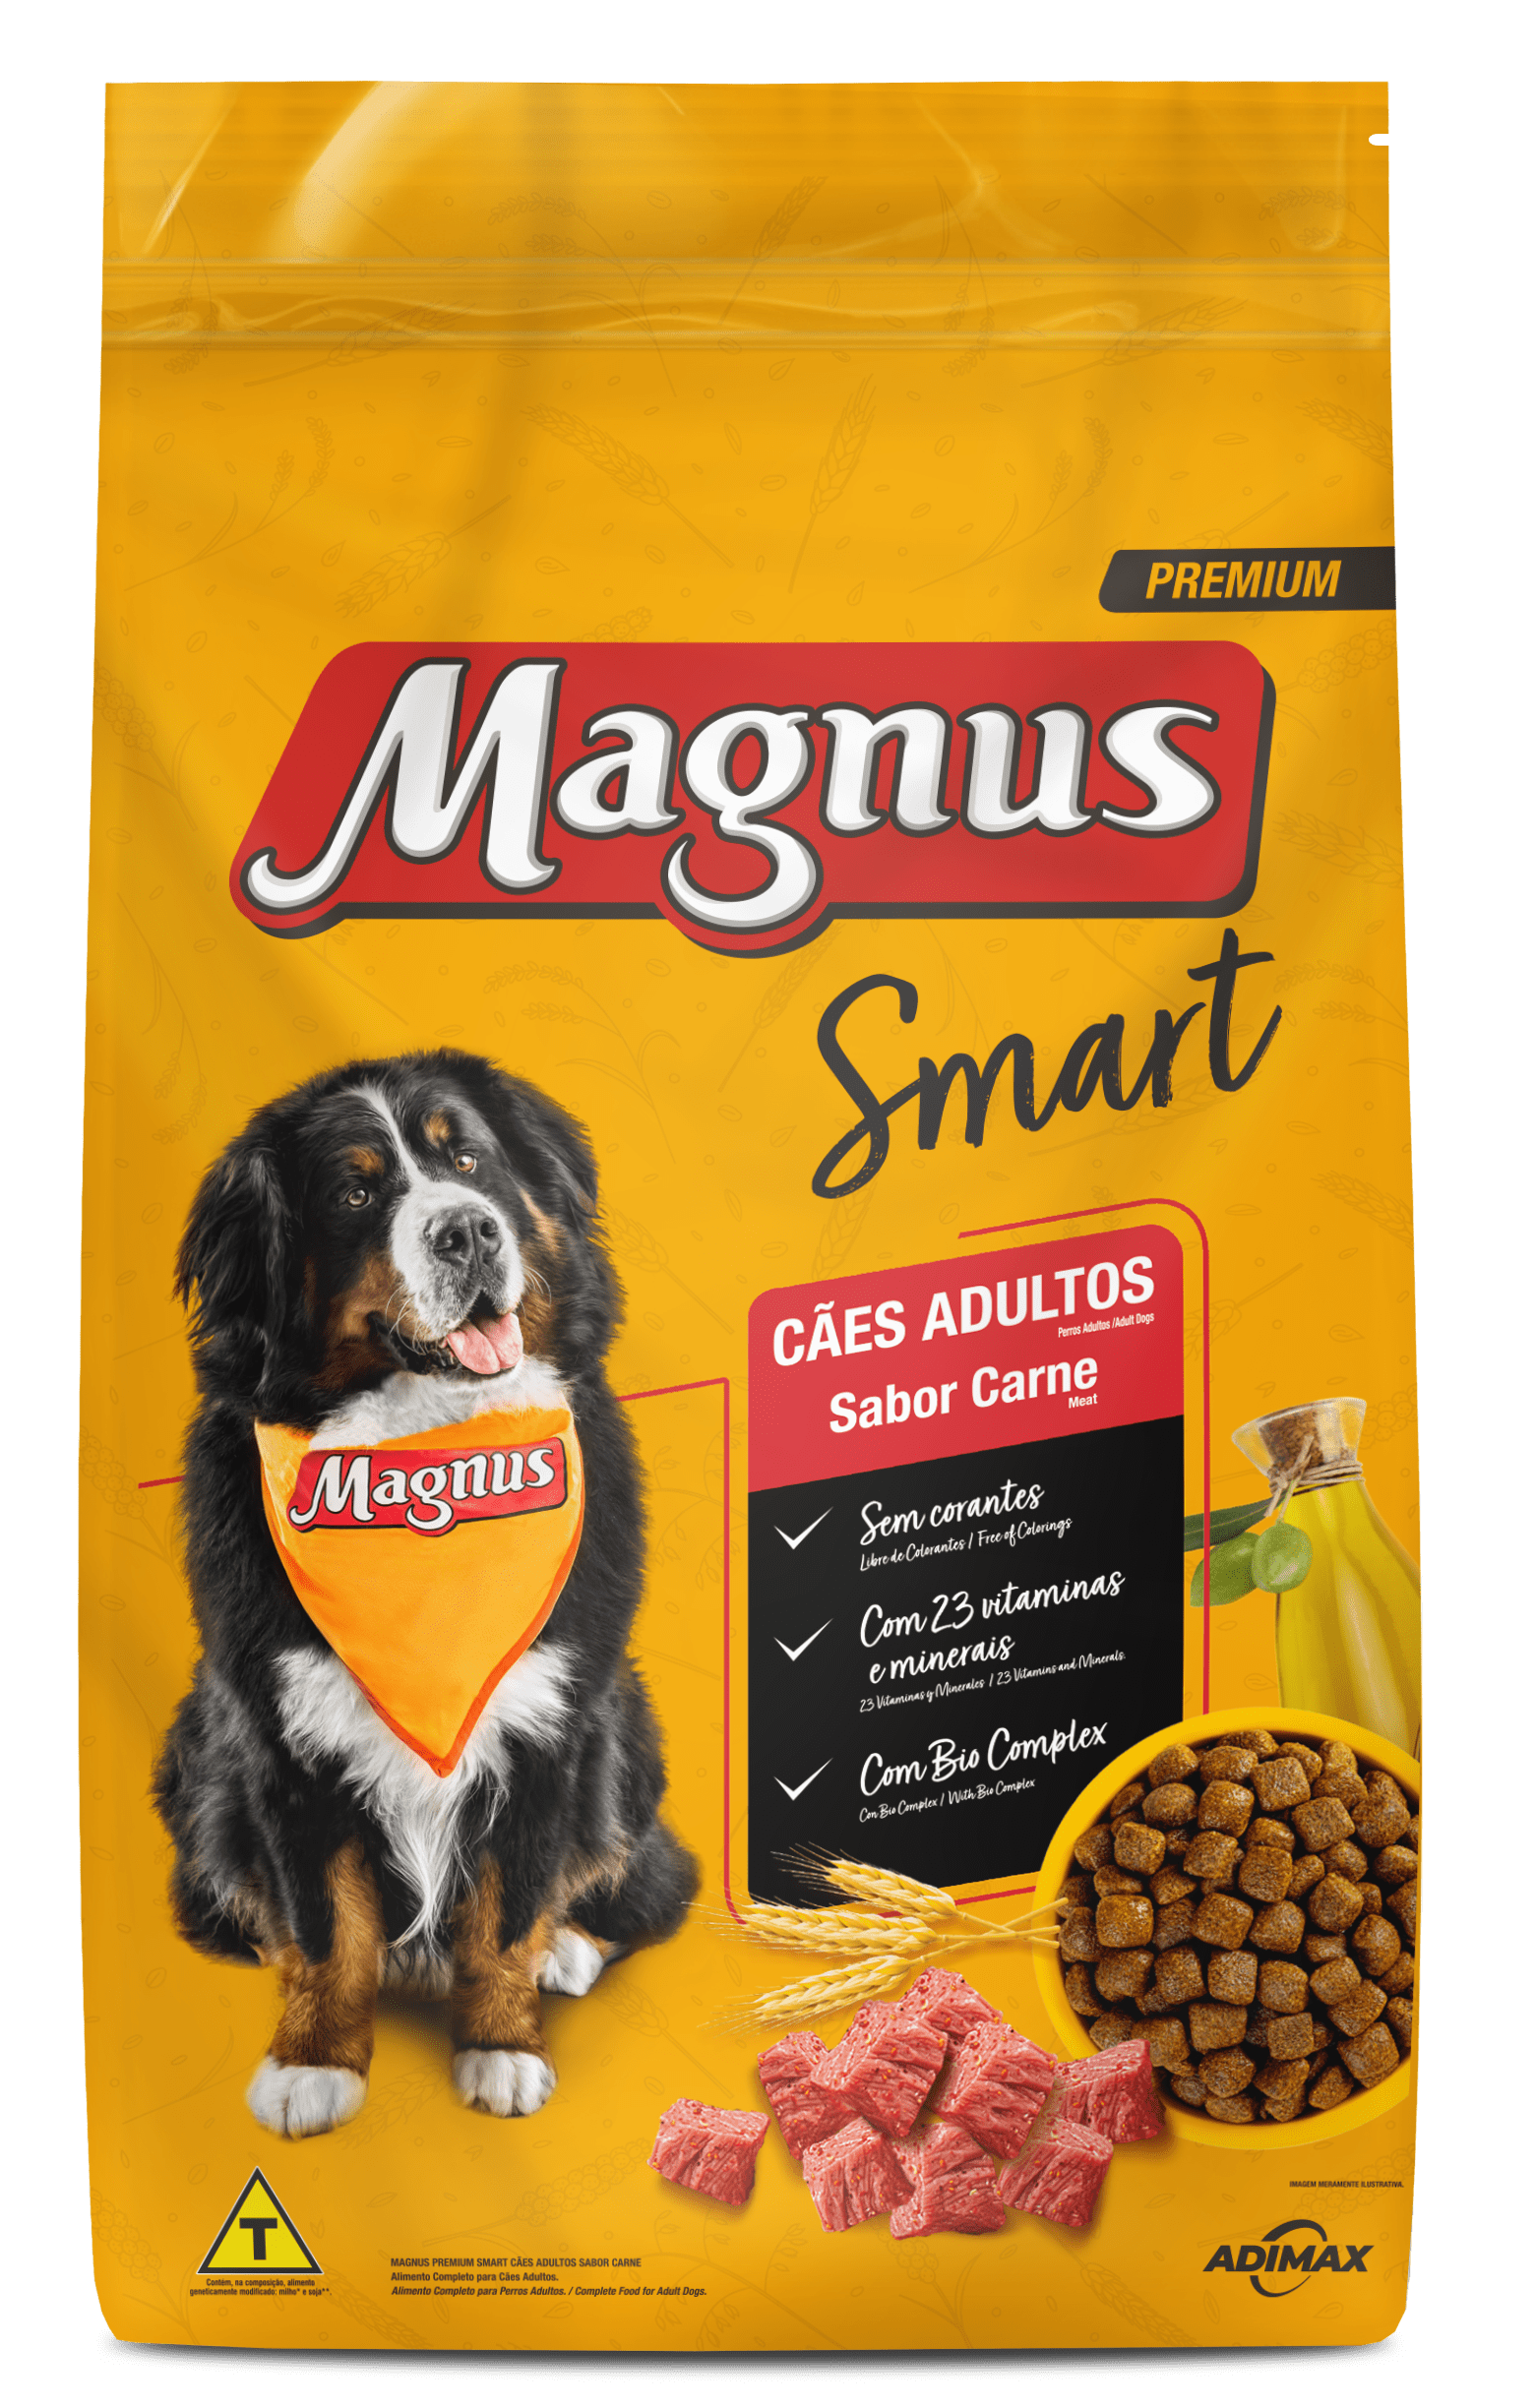 Magnus Premium Smart Cães Adultos Sabor Carne